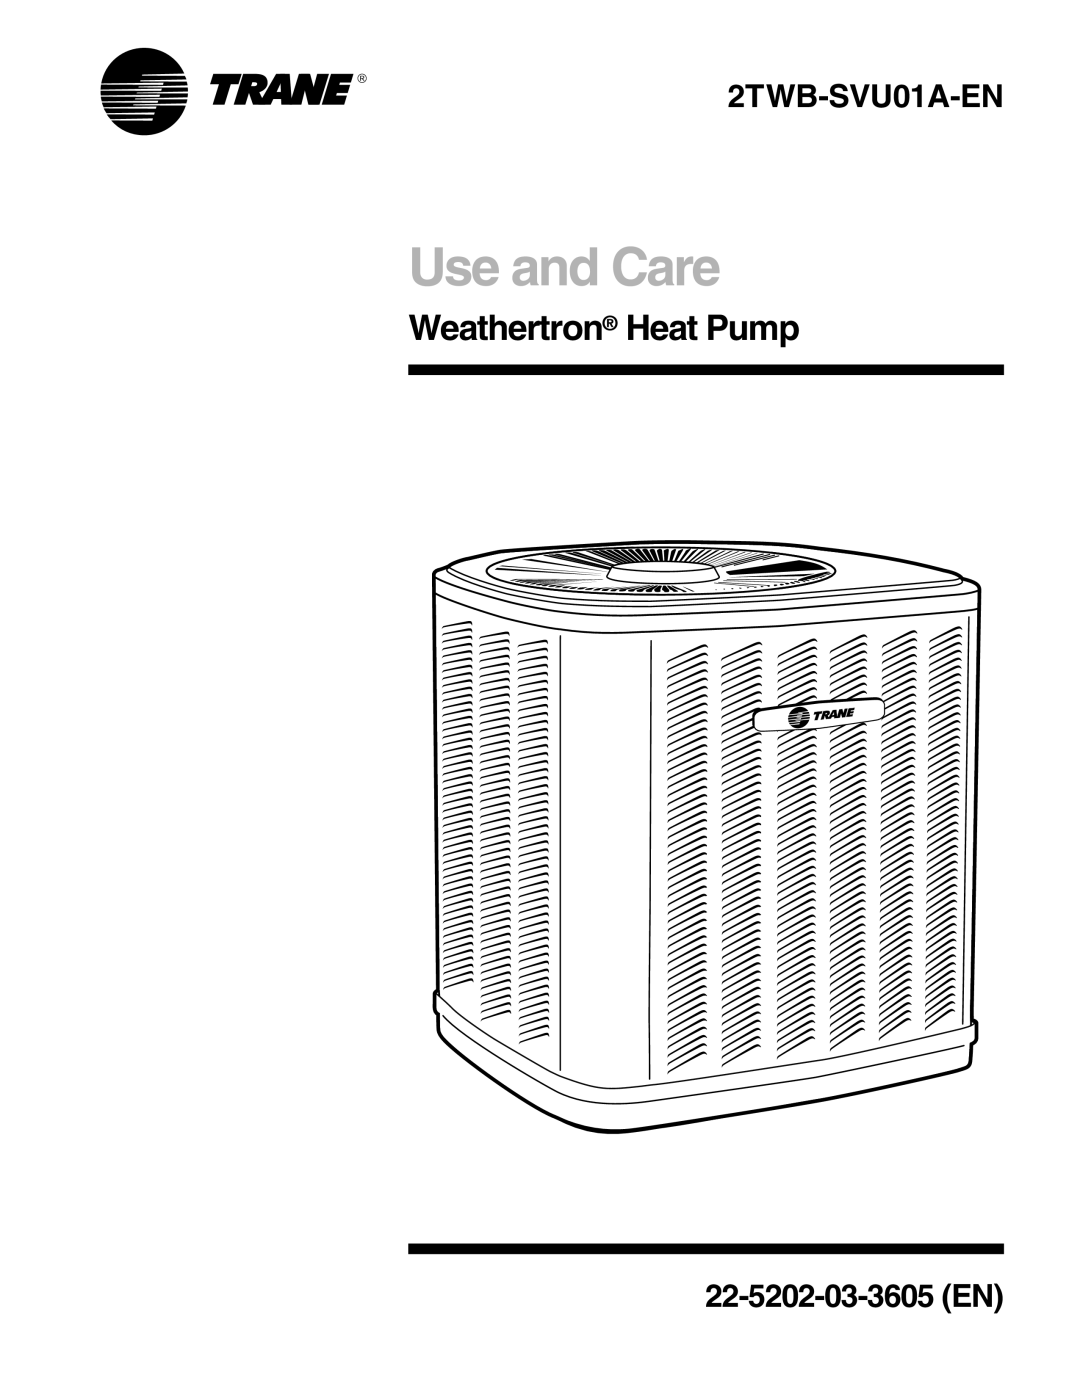 Trane 2TWB-SVU01A-EN manual Weathertron Heat Pump, Use and Care, 22-5202-03-3605EN 